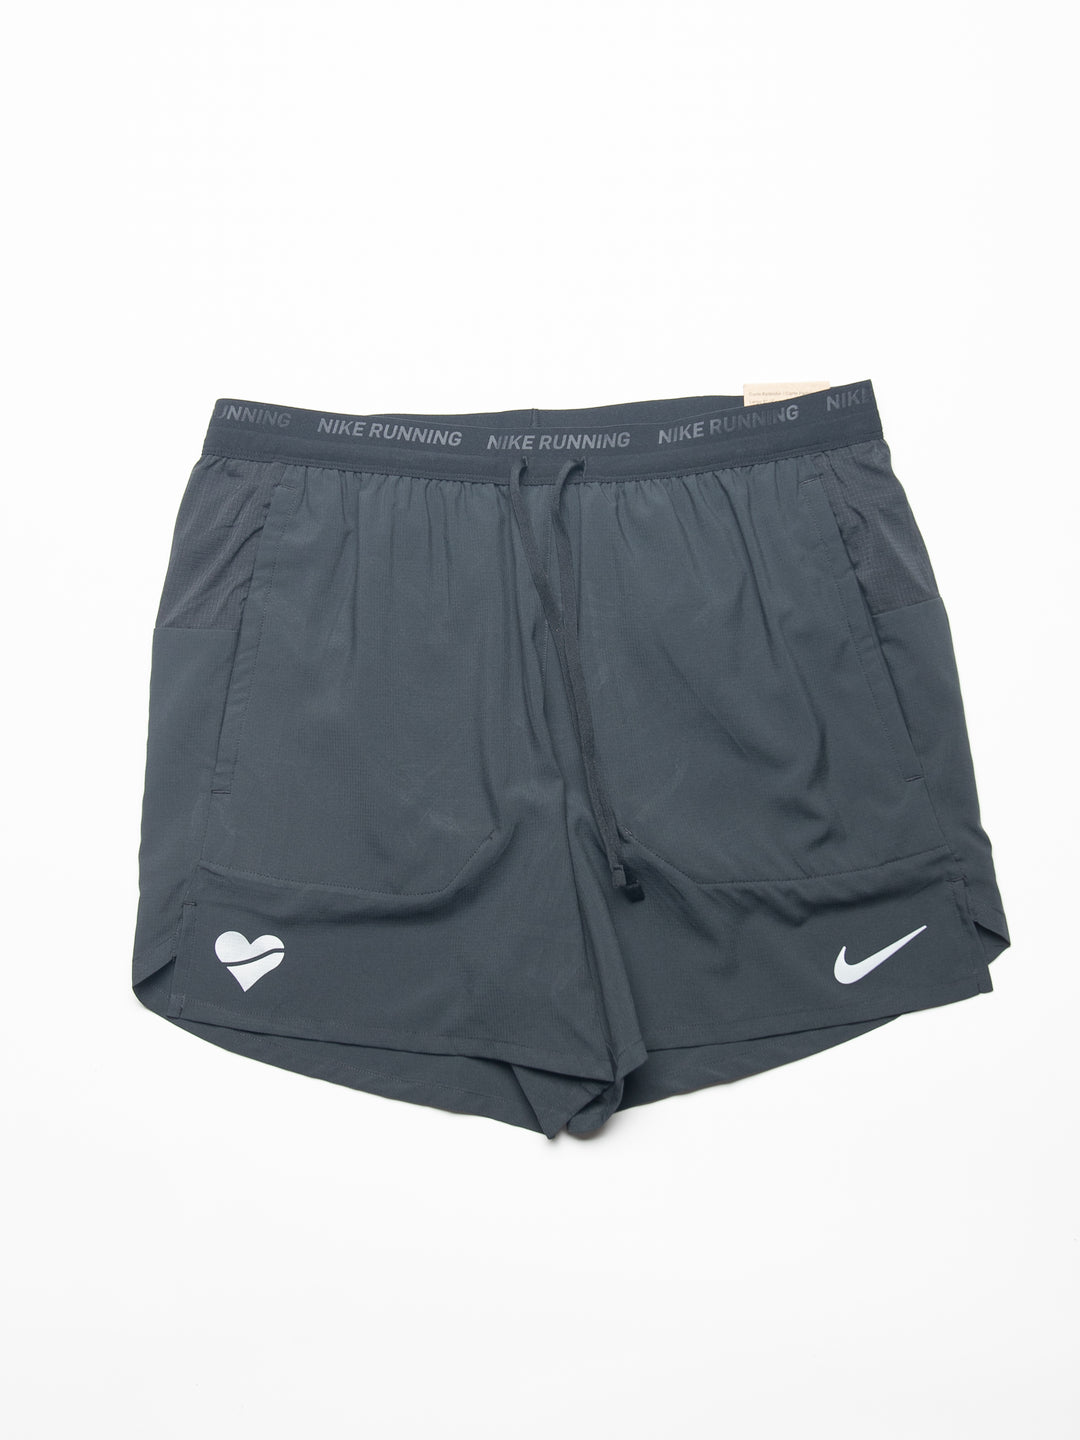 Nike Flex Stride Shorts 5 BF Iron Grey/Heather/Reflective Silver MD 5